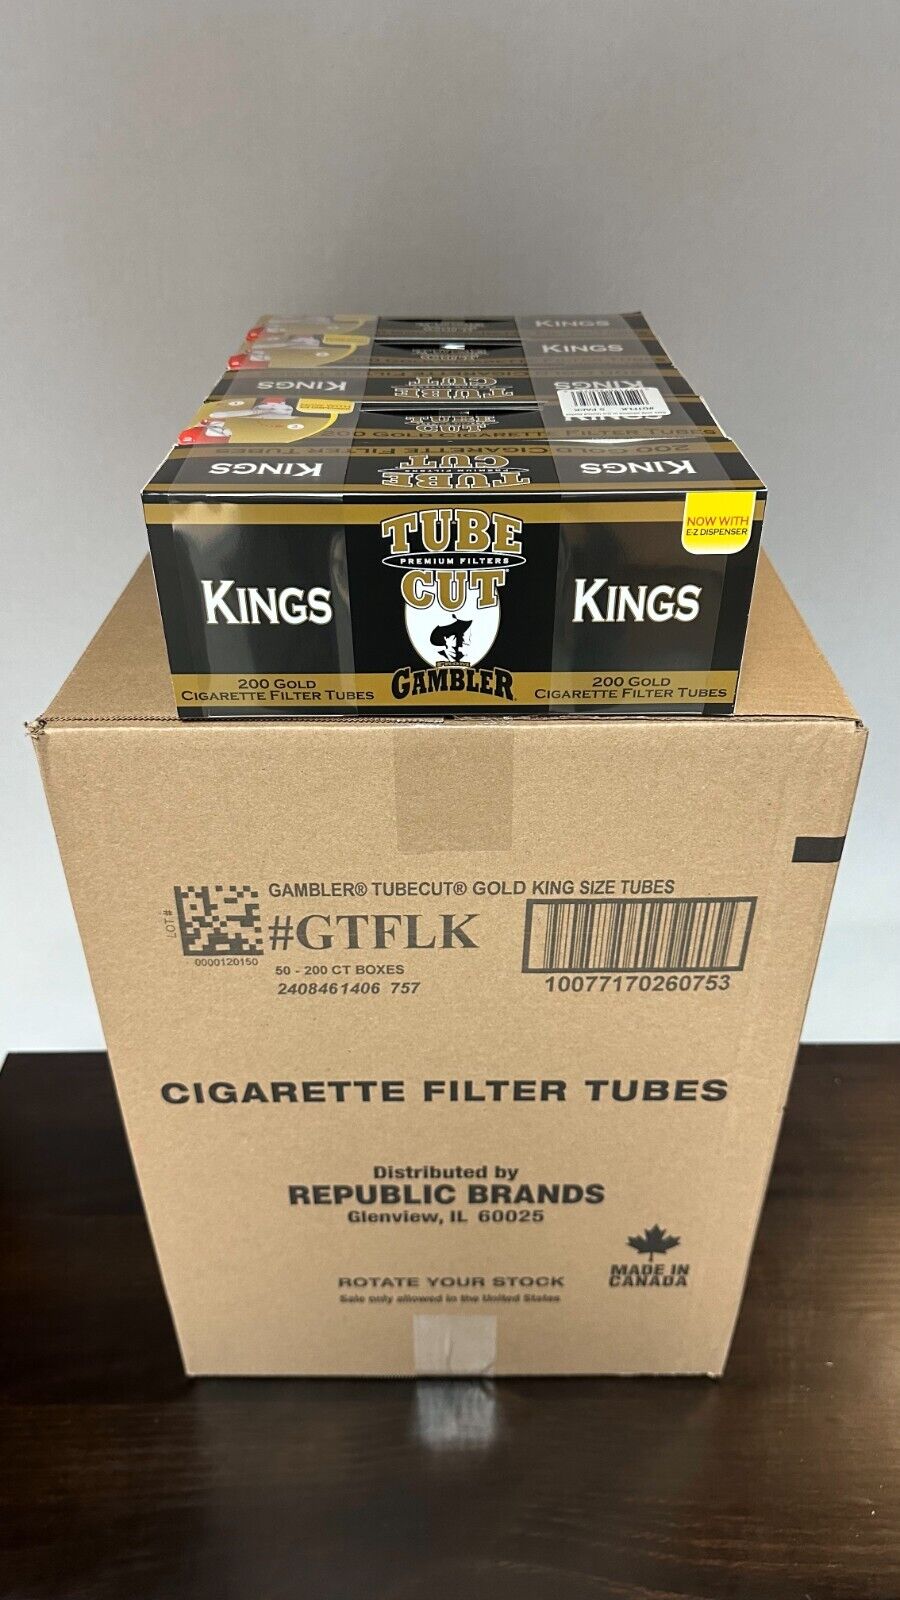 Gambler Tube Cut Gold King Size RYO Cigarette Tubes - Full Case (10000 Tubes)